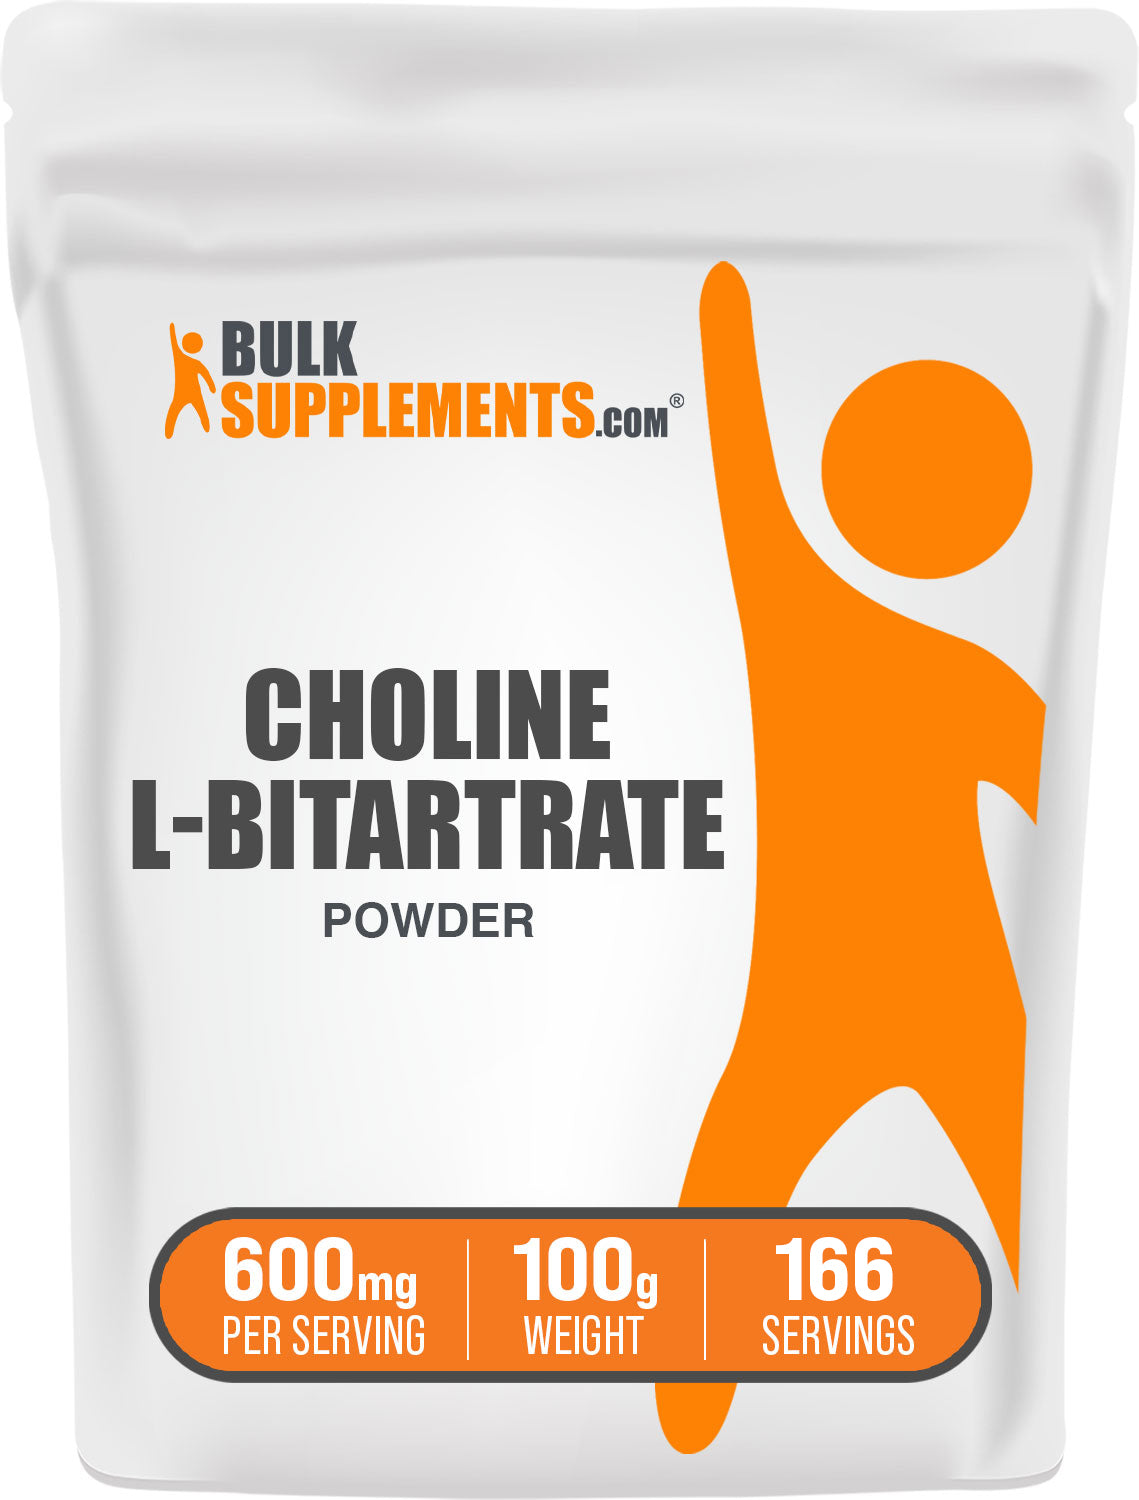 Choline L-Bitartrate Powder 100g bag